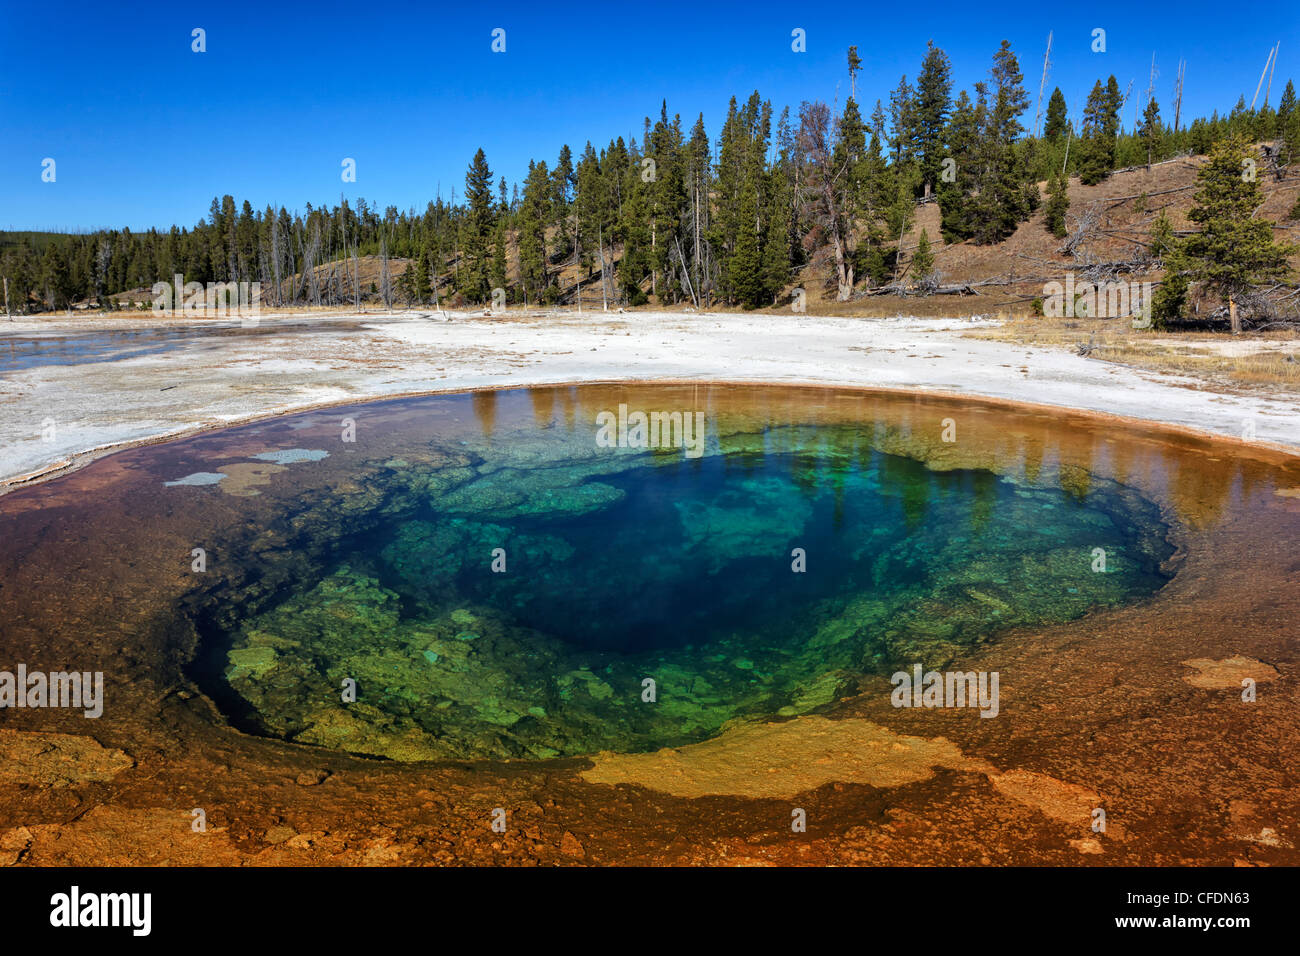 Beauty pool - Yellowstone national park Stock Photo